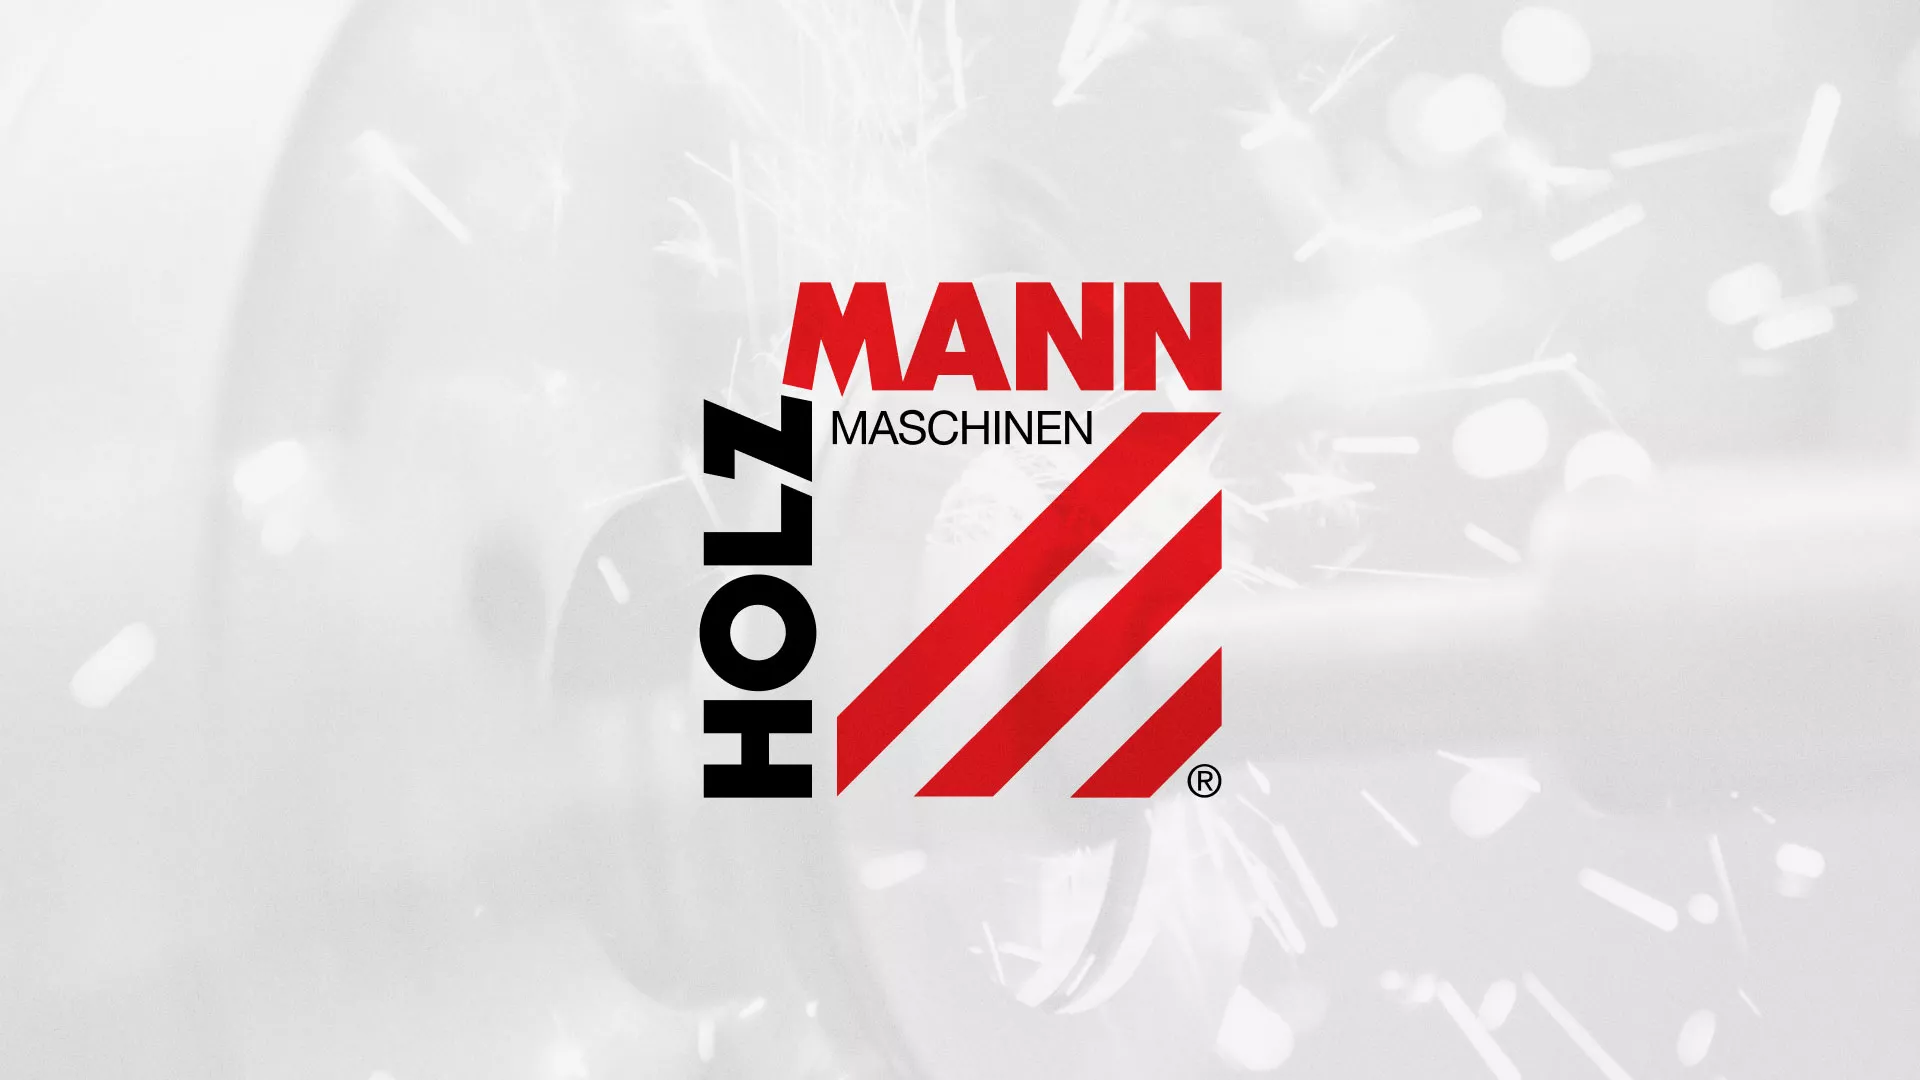 Создание сайта компании «HOLZMANN Maschinen GmbH» в Оби